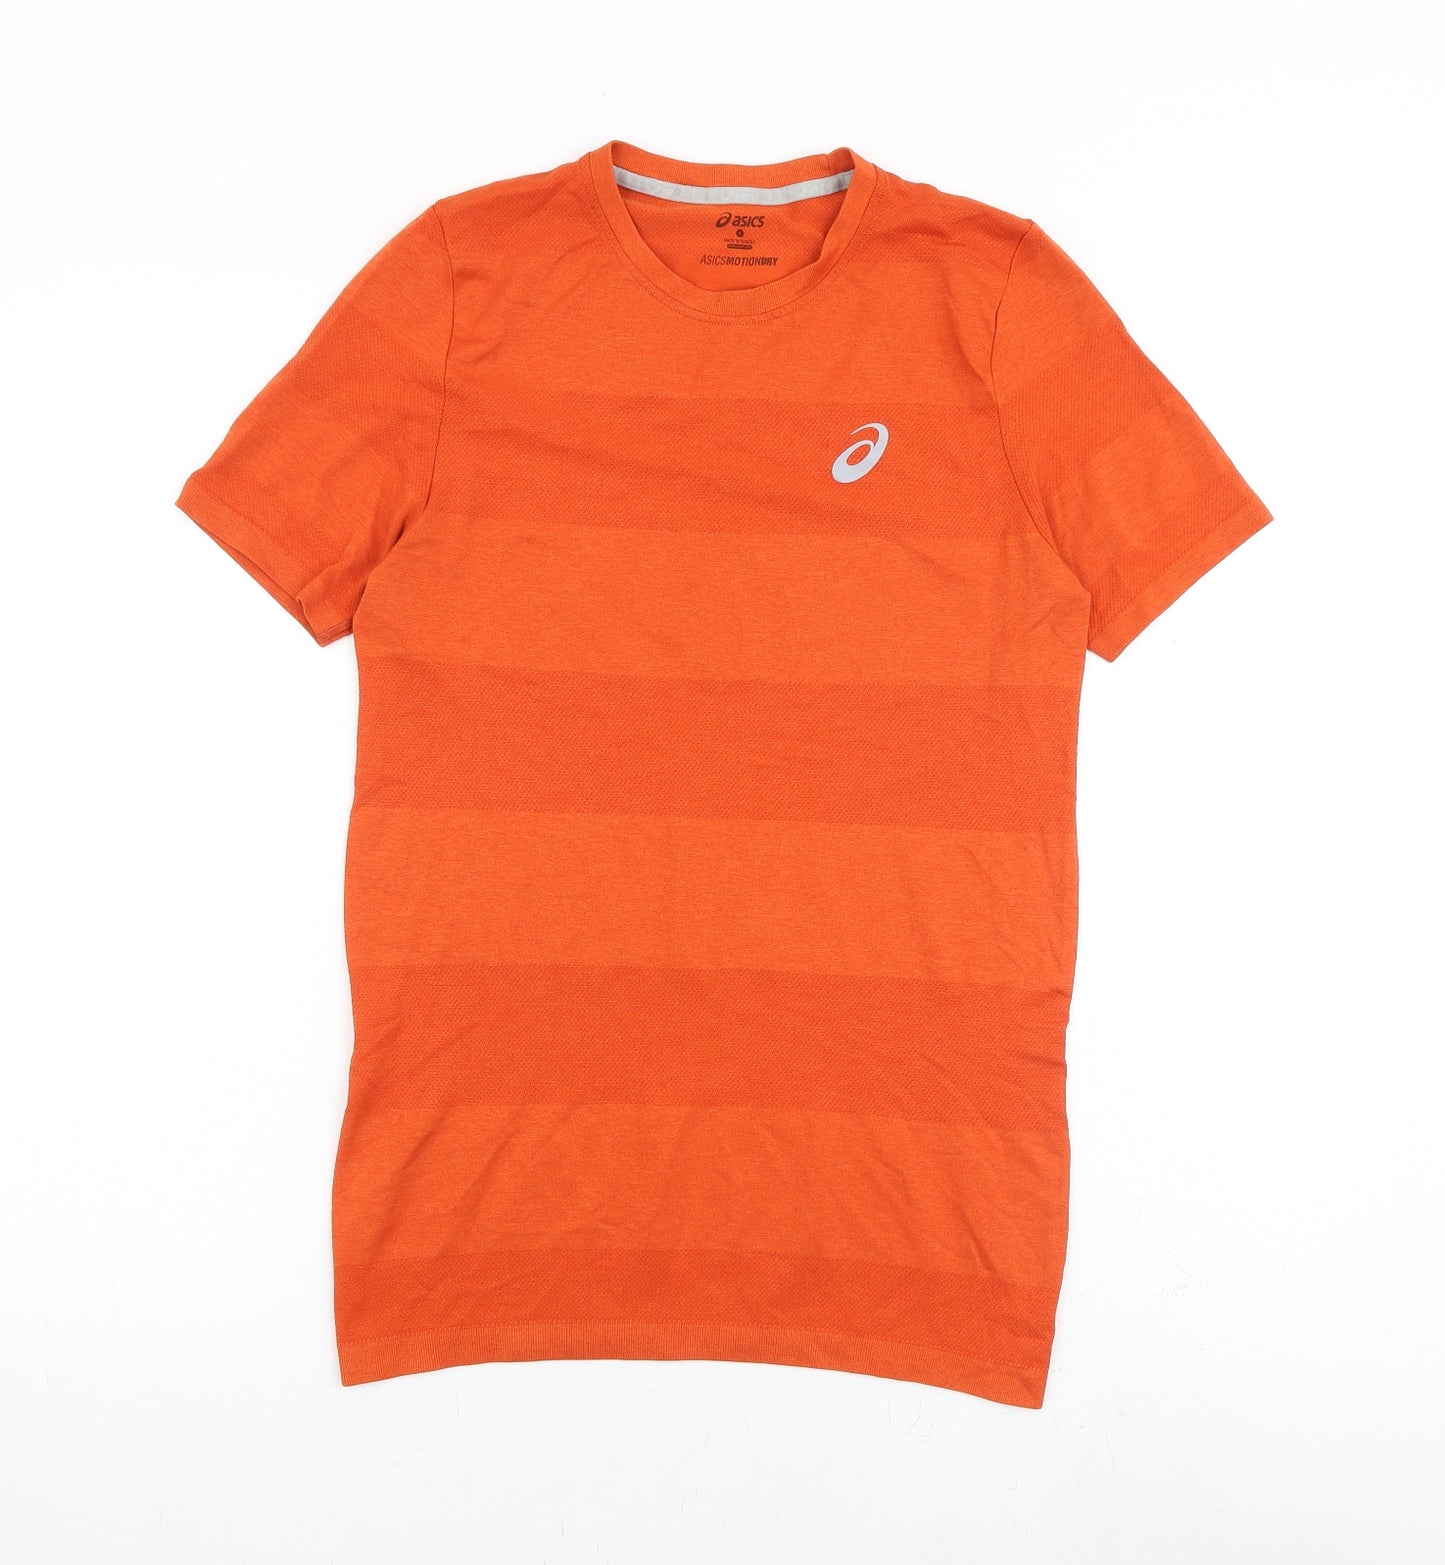 ASICS Mens Orange Striped Polyester T-Shirt Size S Crew Neck